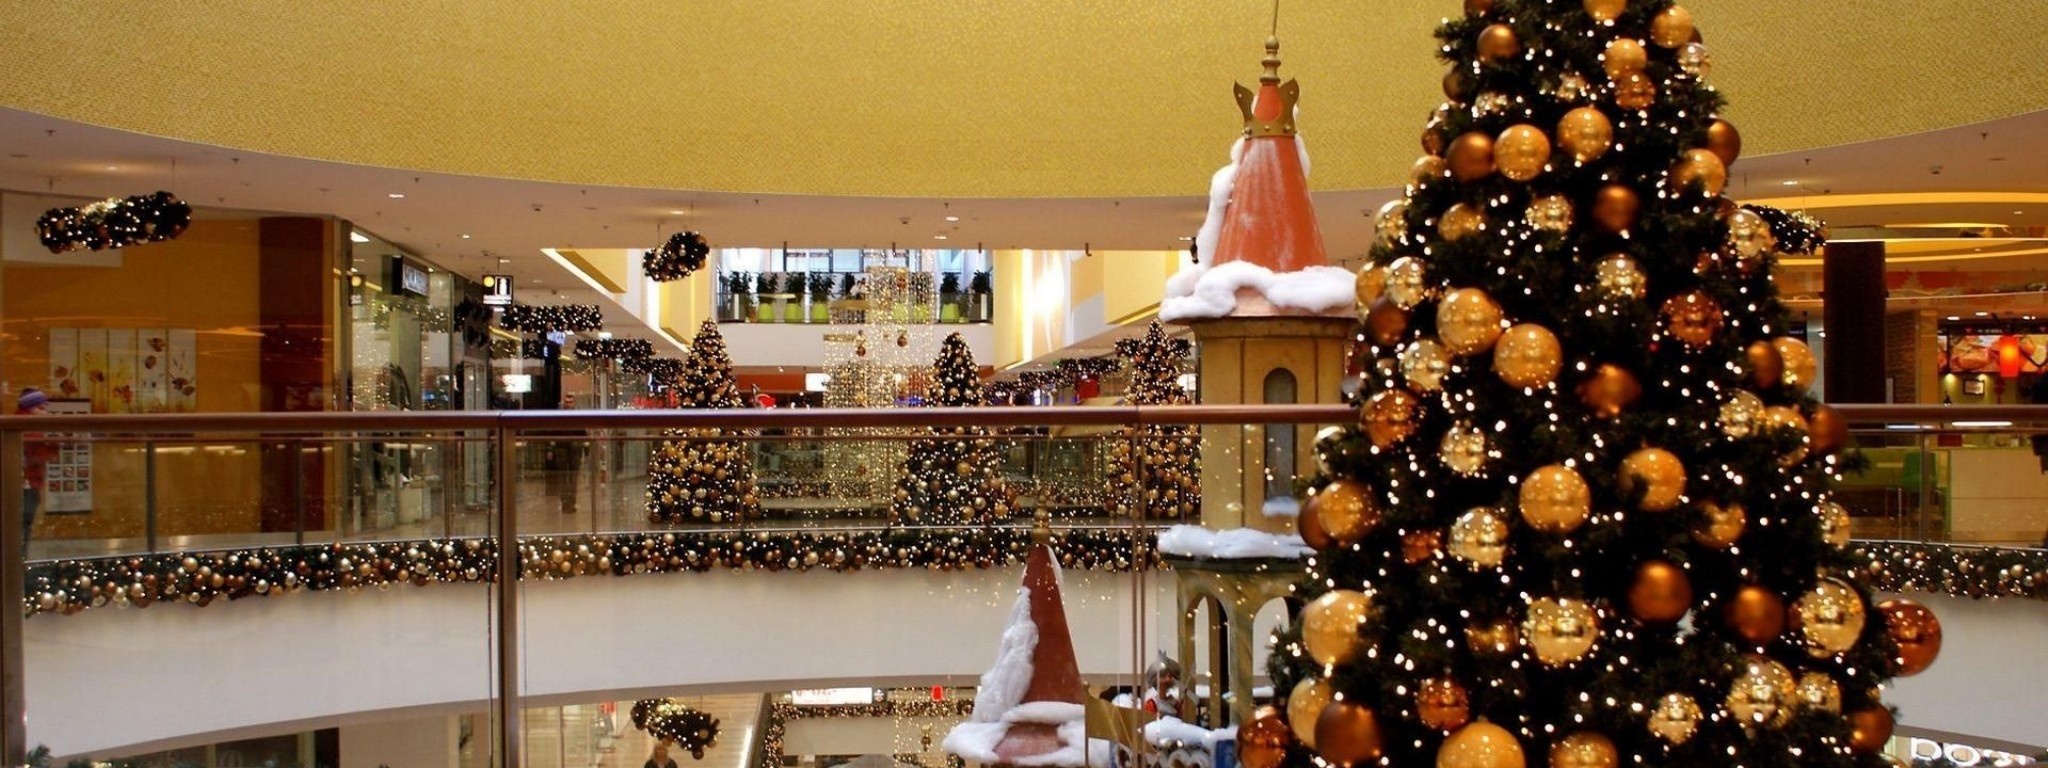 Tree Shopping Center Holiday Christmas Vanity New Year Mood